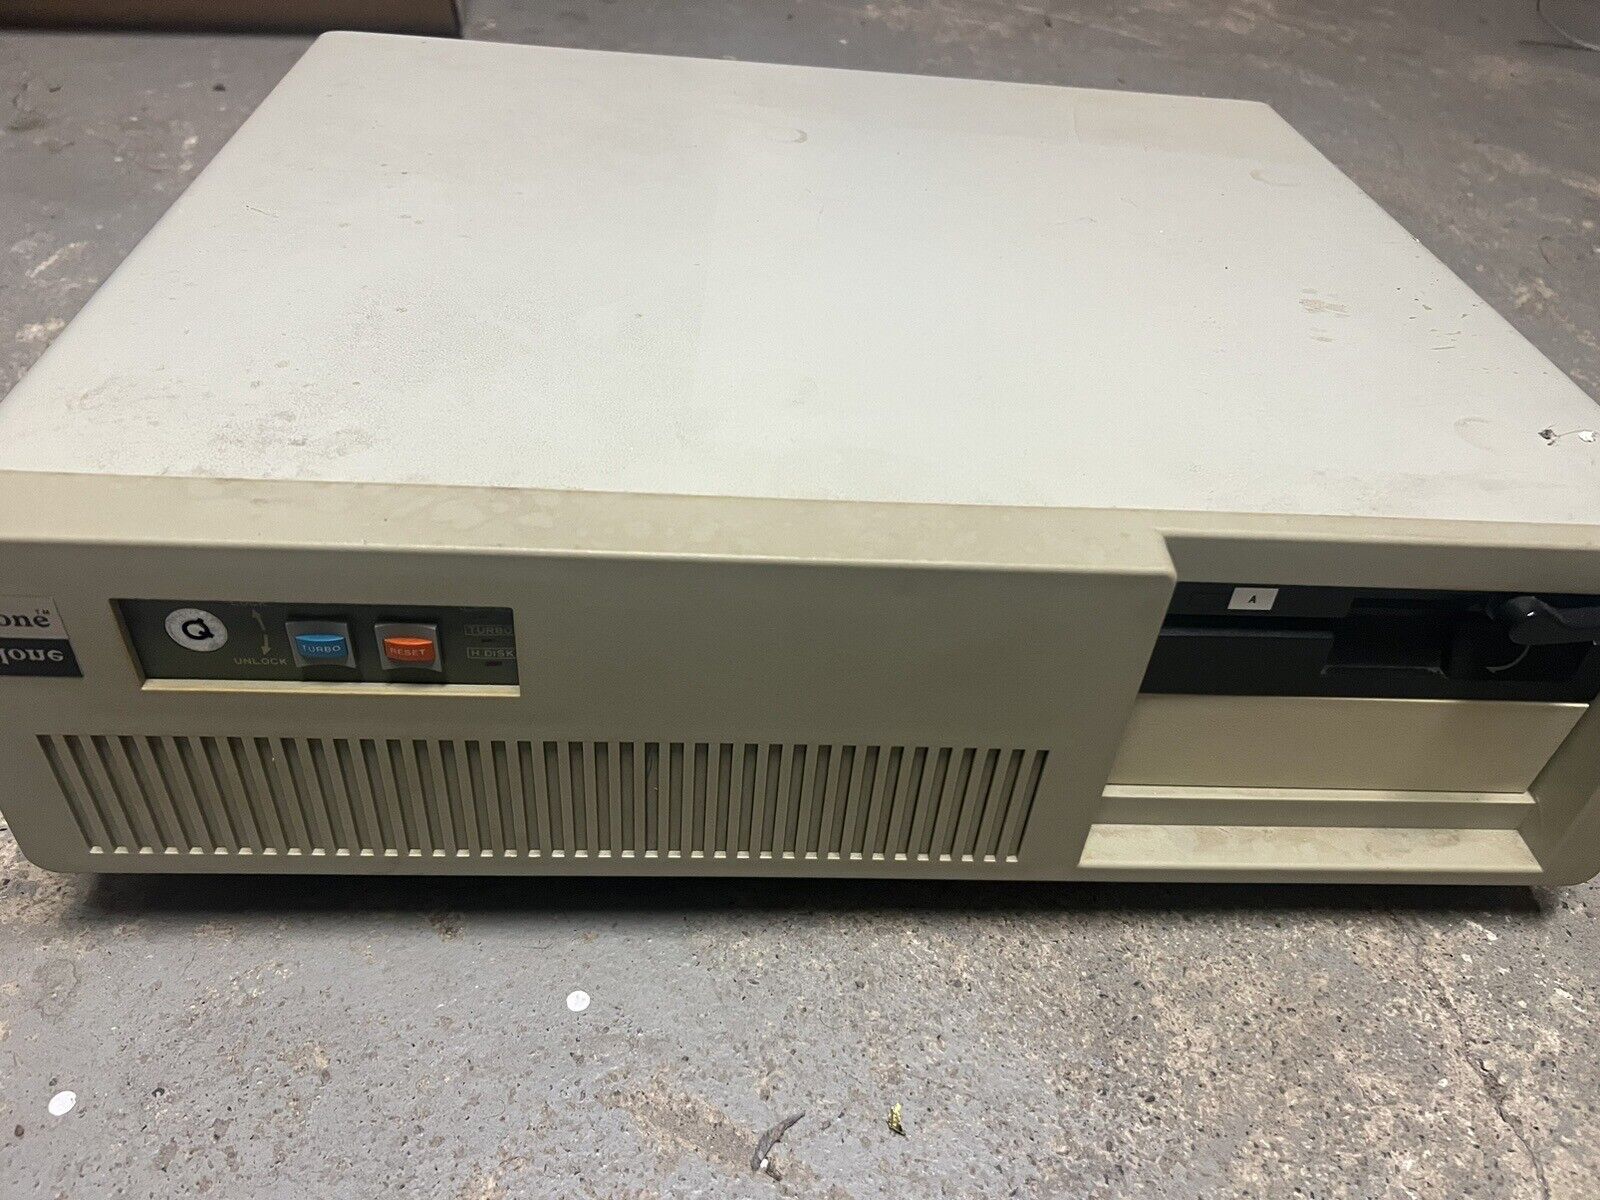 IBM Clone Computer